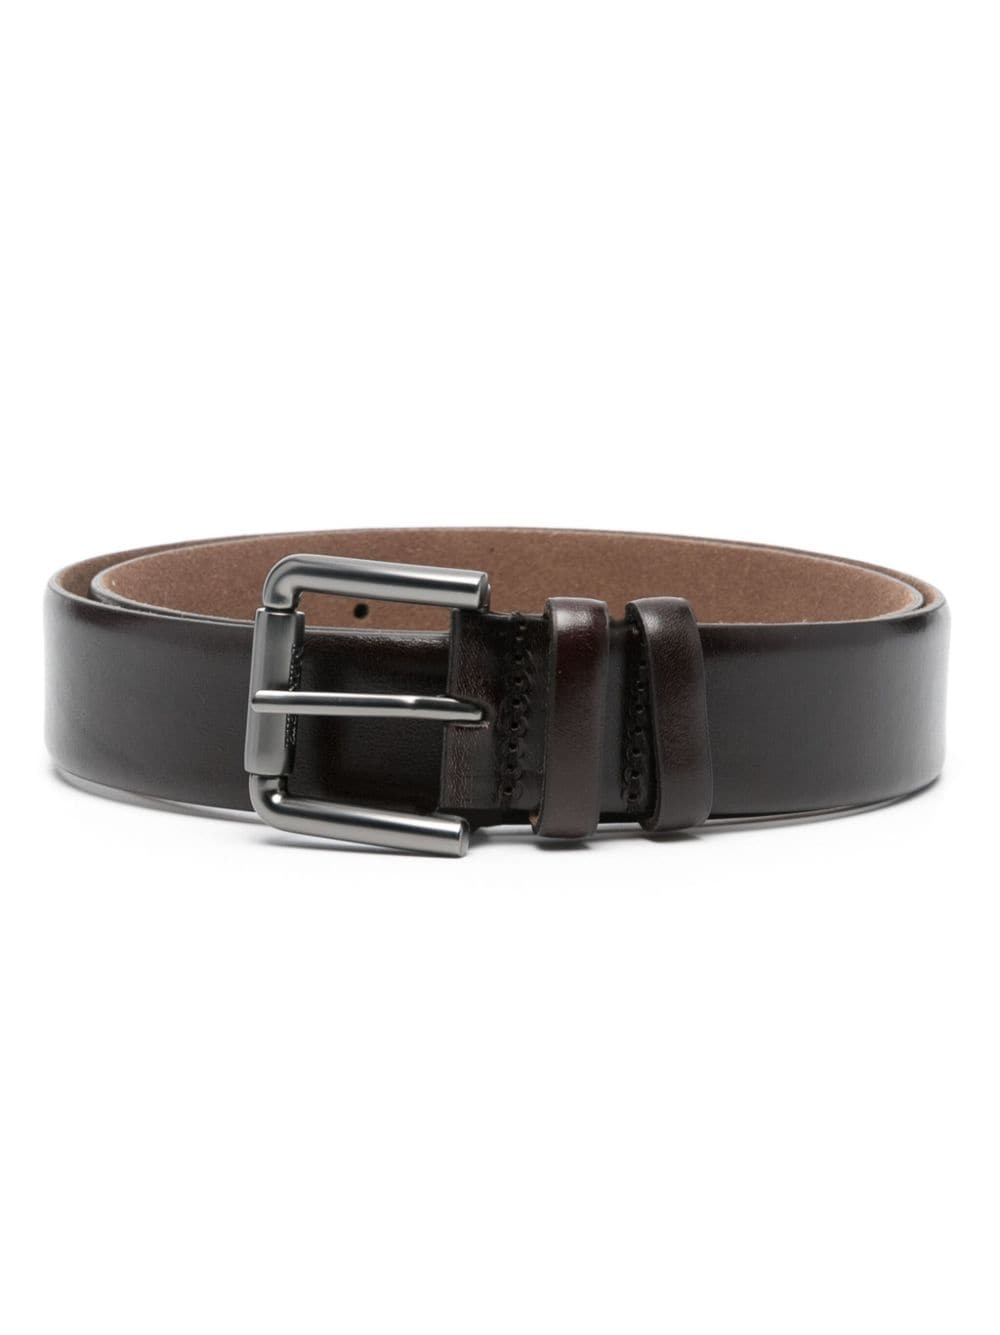 Grained leather belt<BR/><BR/><BR/>